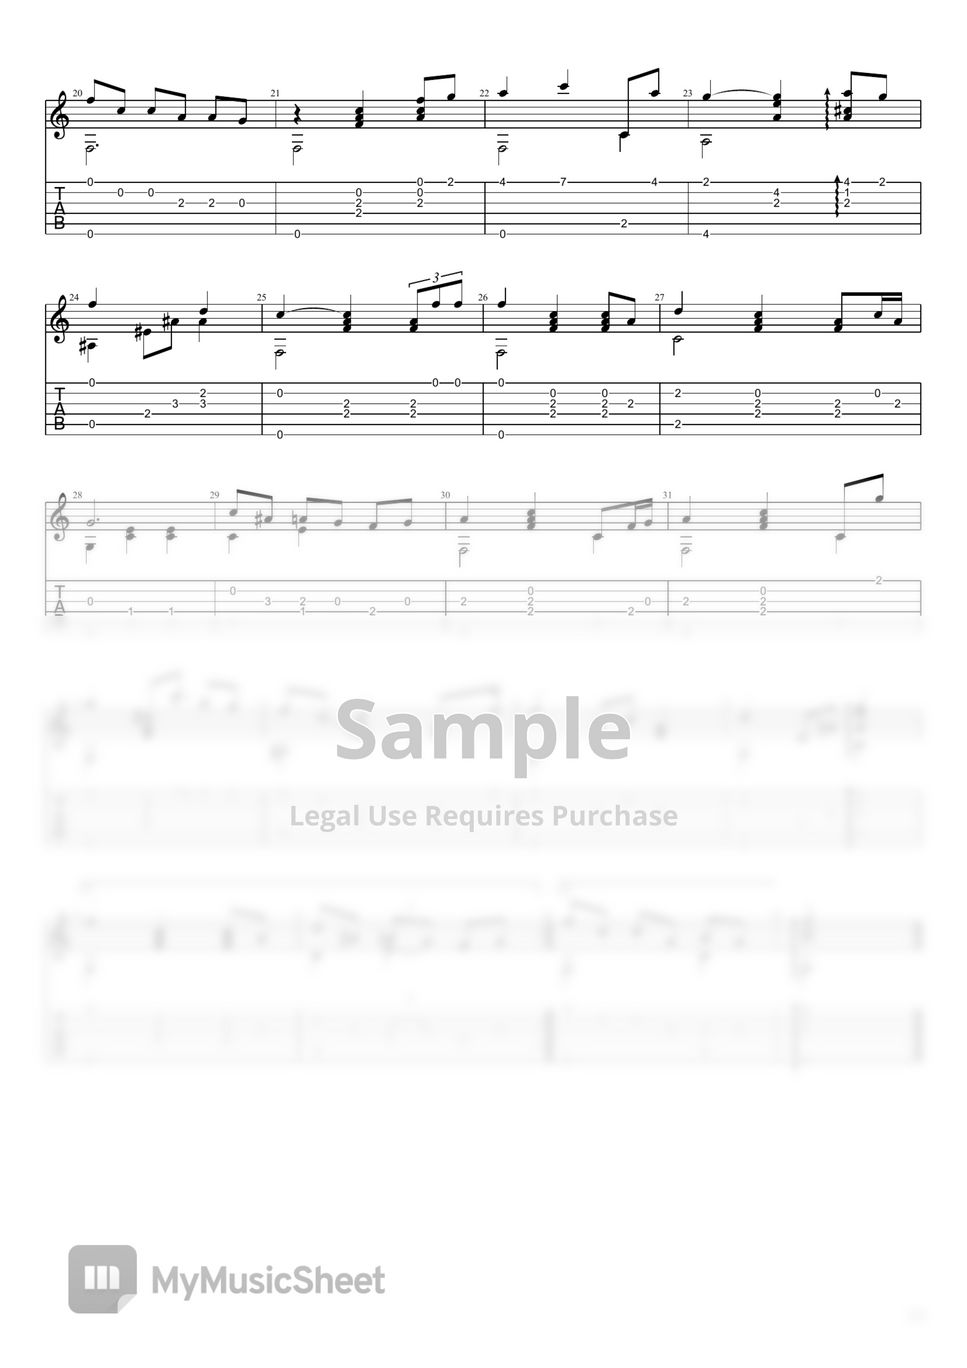 Pee Wee King - Tennessee Waltz (Fingerstyle Guitar Arrangement,  Lute/Vihuela tuning, Capo 1st fret) by D.Petrova (Edora)